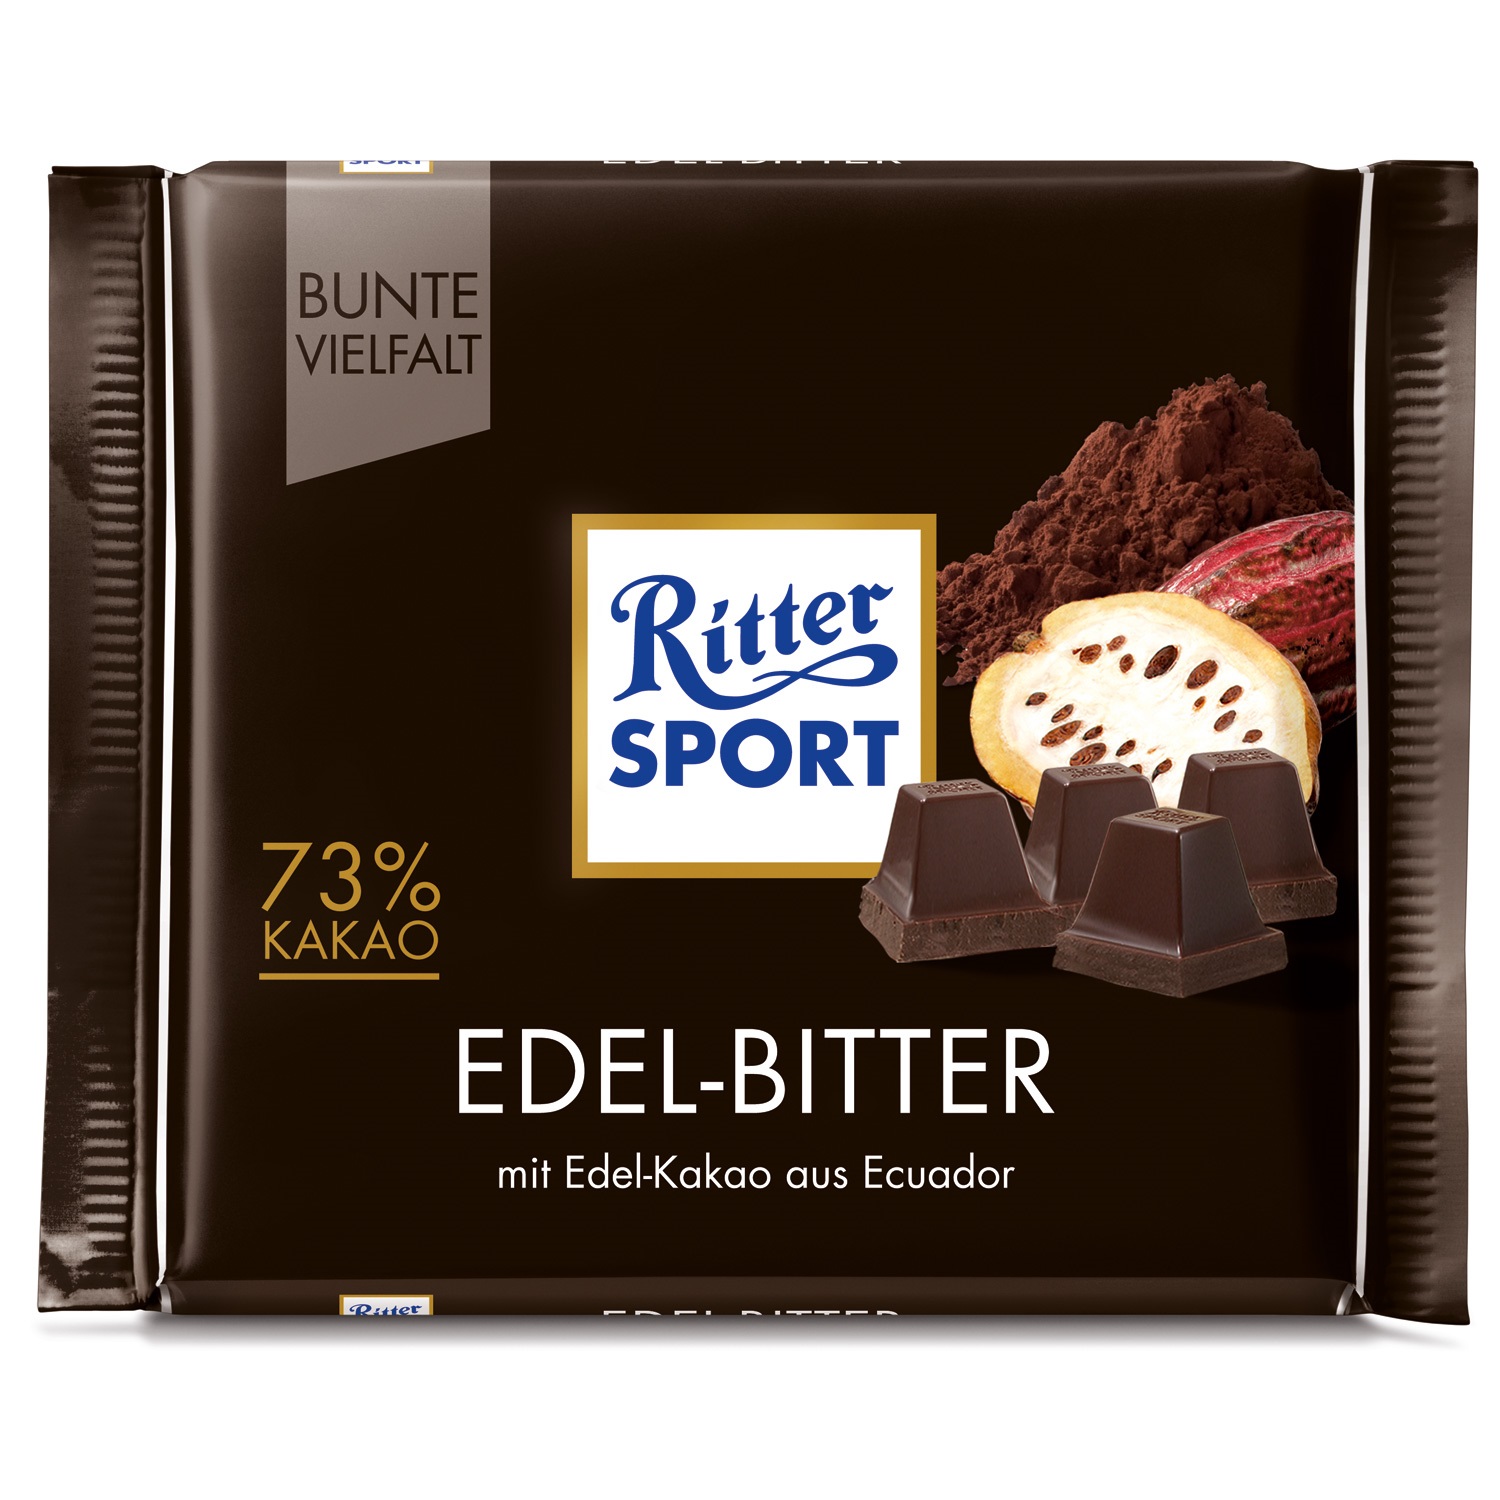 Шоколадка ритер. Шоколад "Ritter Sport" 100г. Ritter Sport темный шоколад. Extra Cocoa Ritter Sport 100г. Шоколадки Риттер спорт черная.